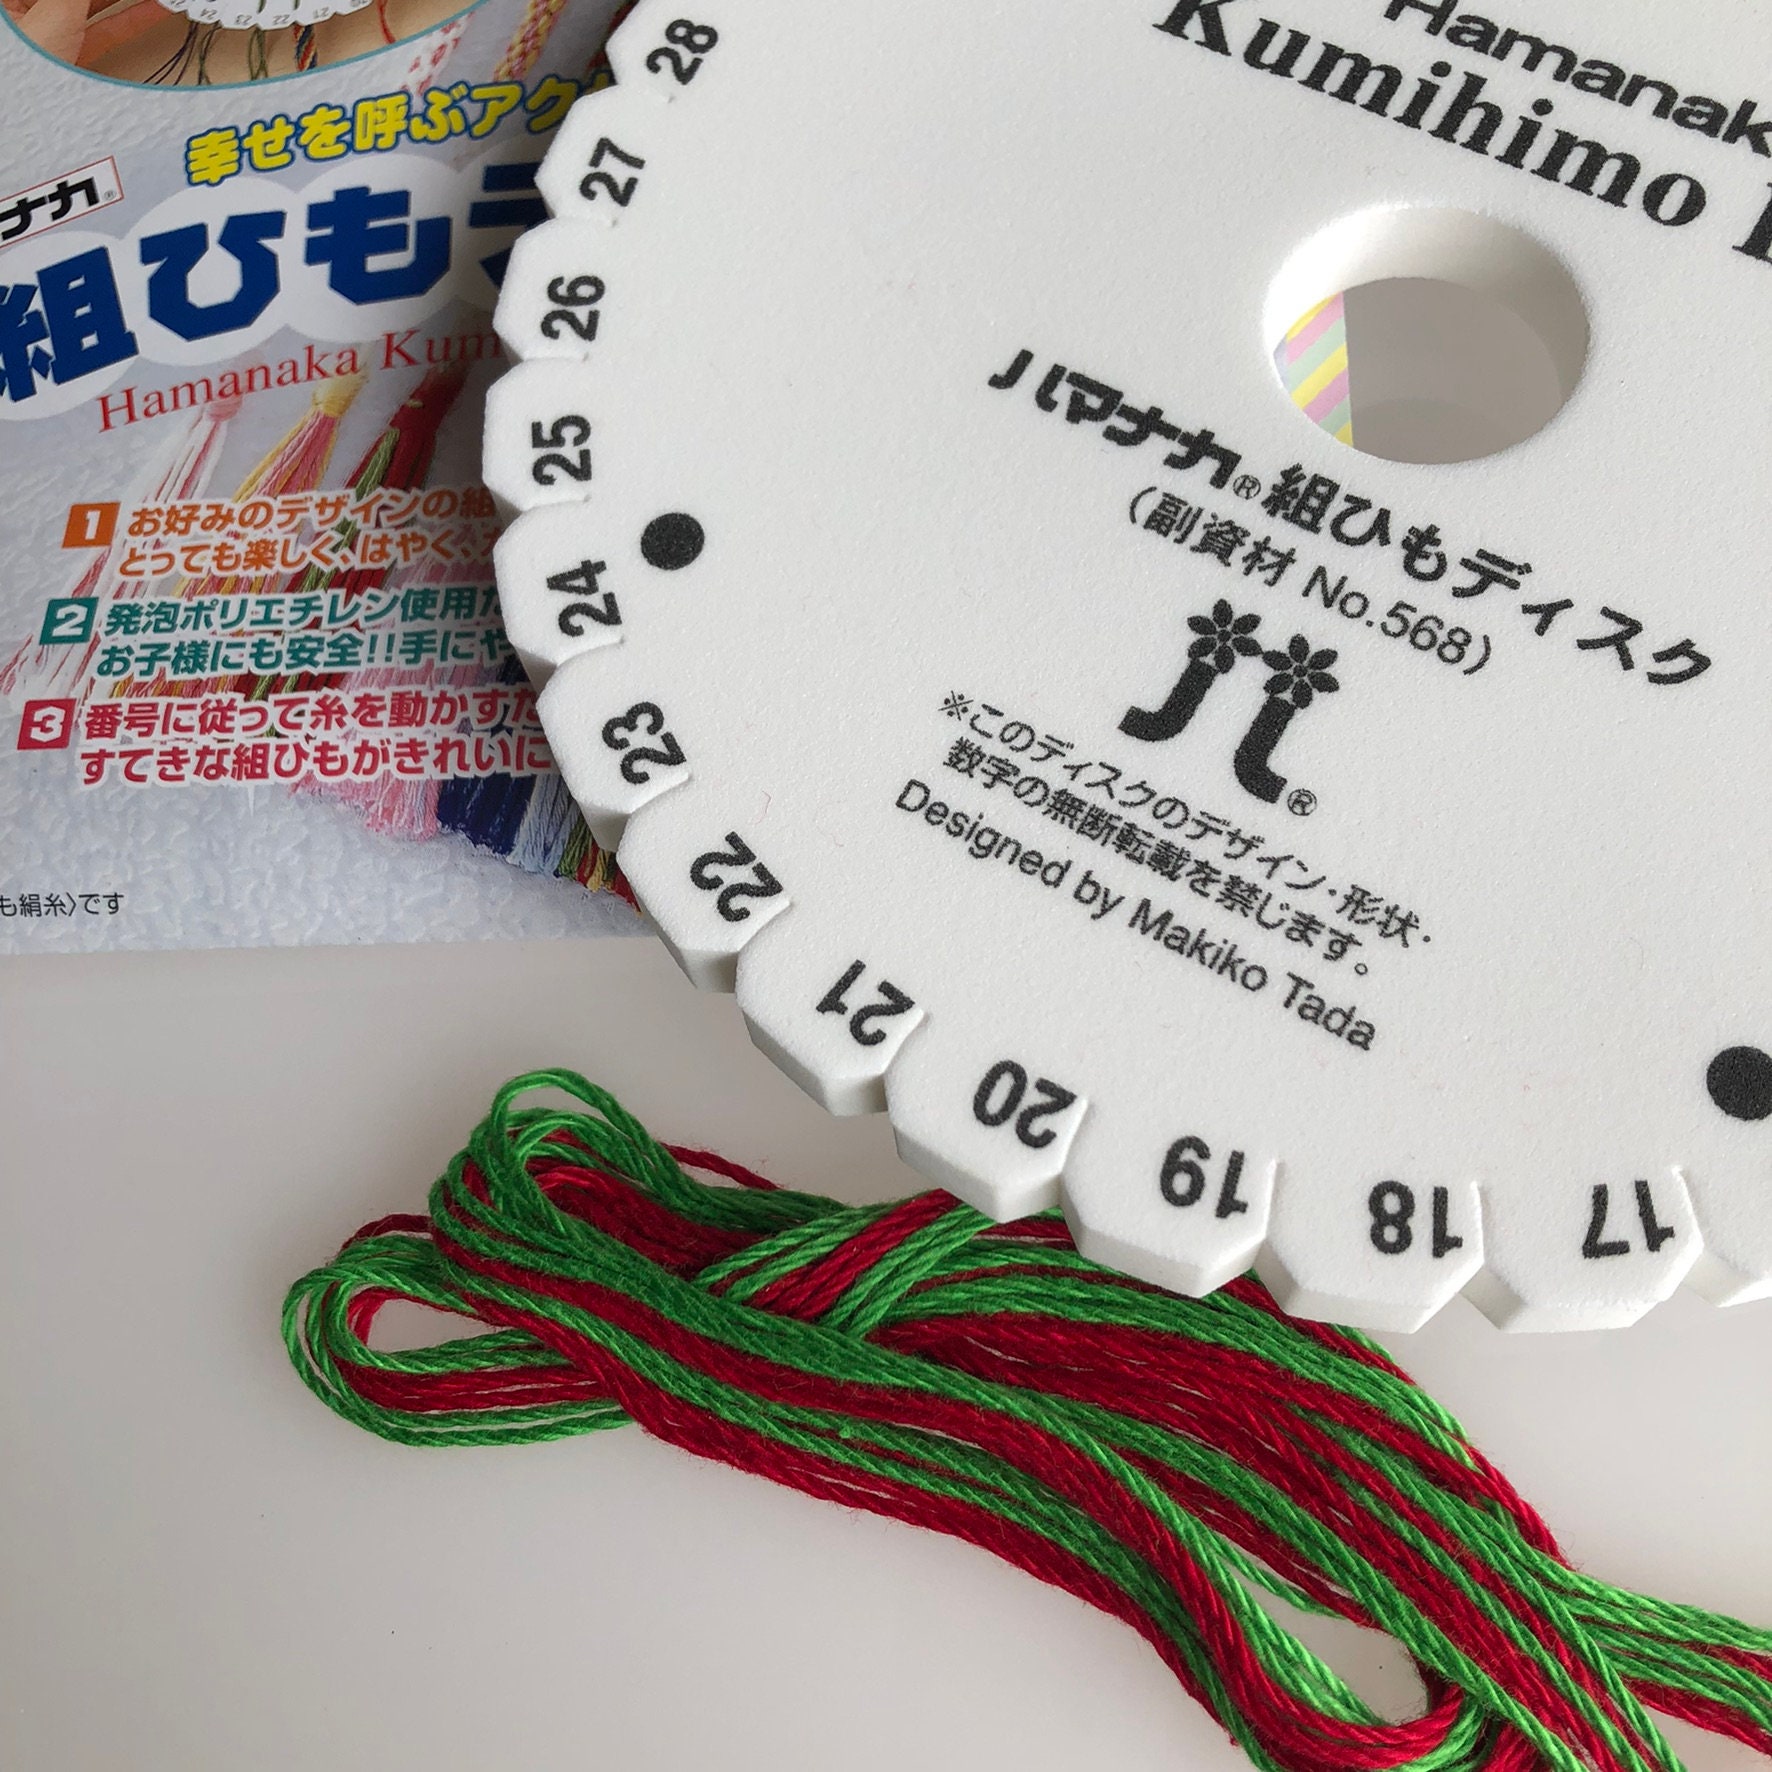 Kumihimo Disc & Plate set for Japanese kumihimo thread braiding/ HAMANAKA -  Atelier Miyabi